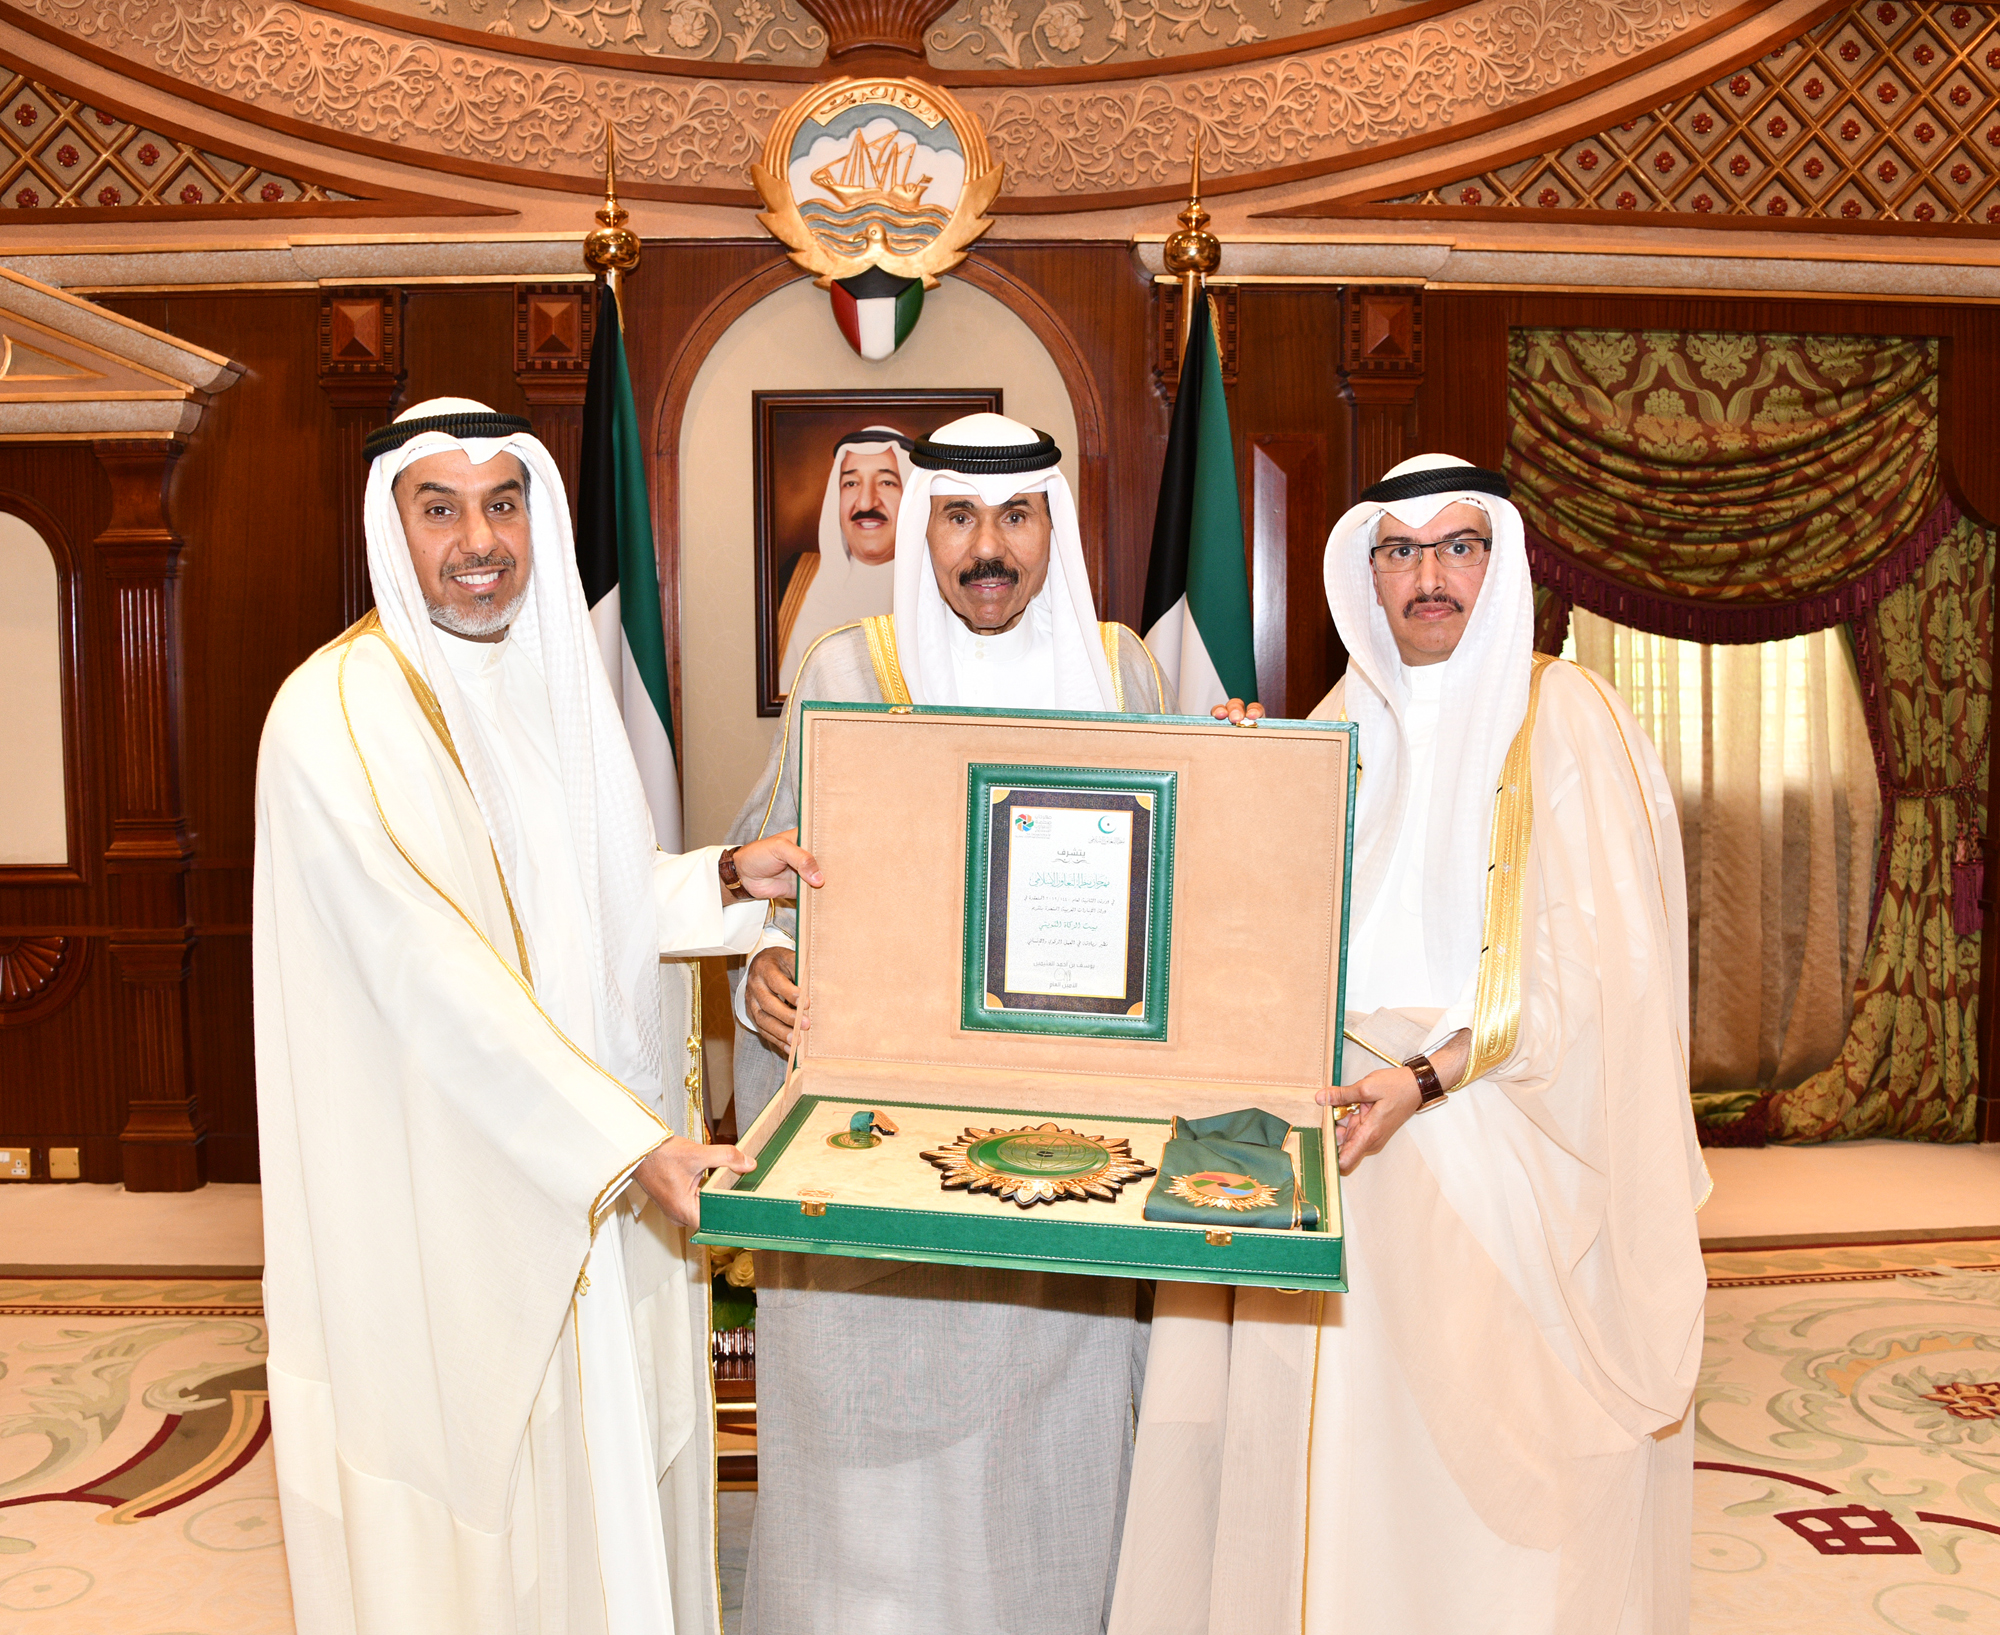 the Crown Prince Sheikh Nawaf Al-Ahmad Al-Jaber Al-Sabah received  Minister of Awqaf and Islamic Affairs Fahad Al-Shula and Chairman of Zakat House Mohammad Al-Otaibi